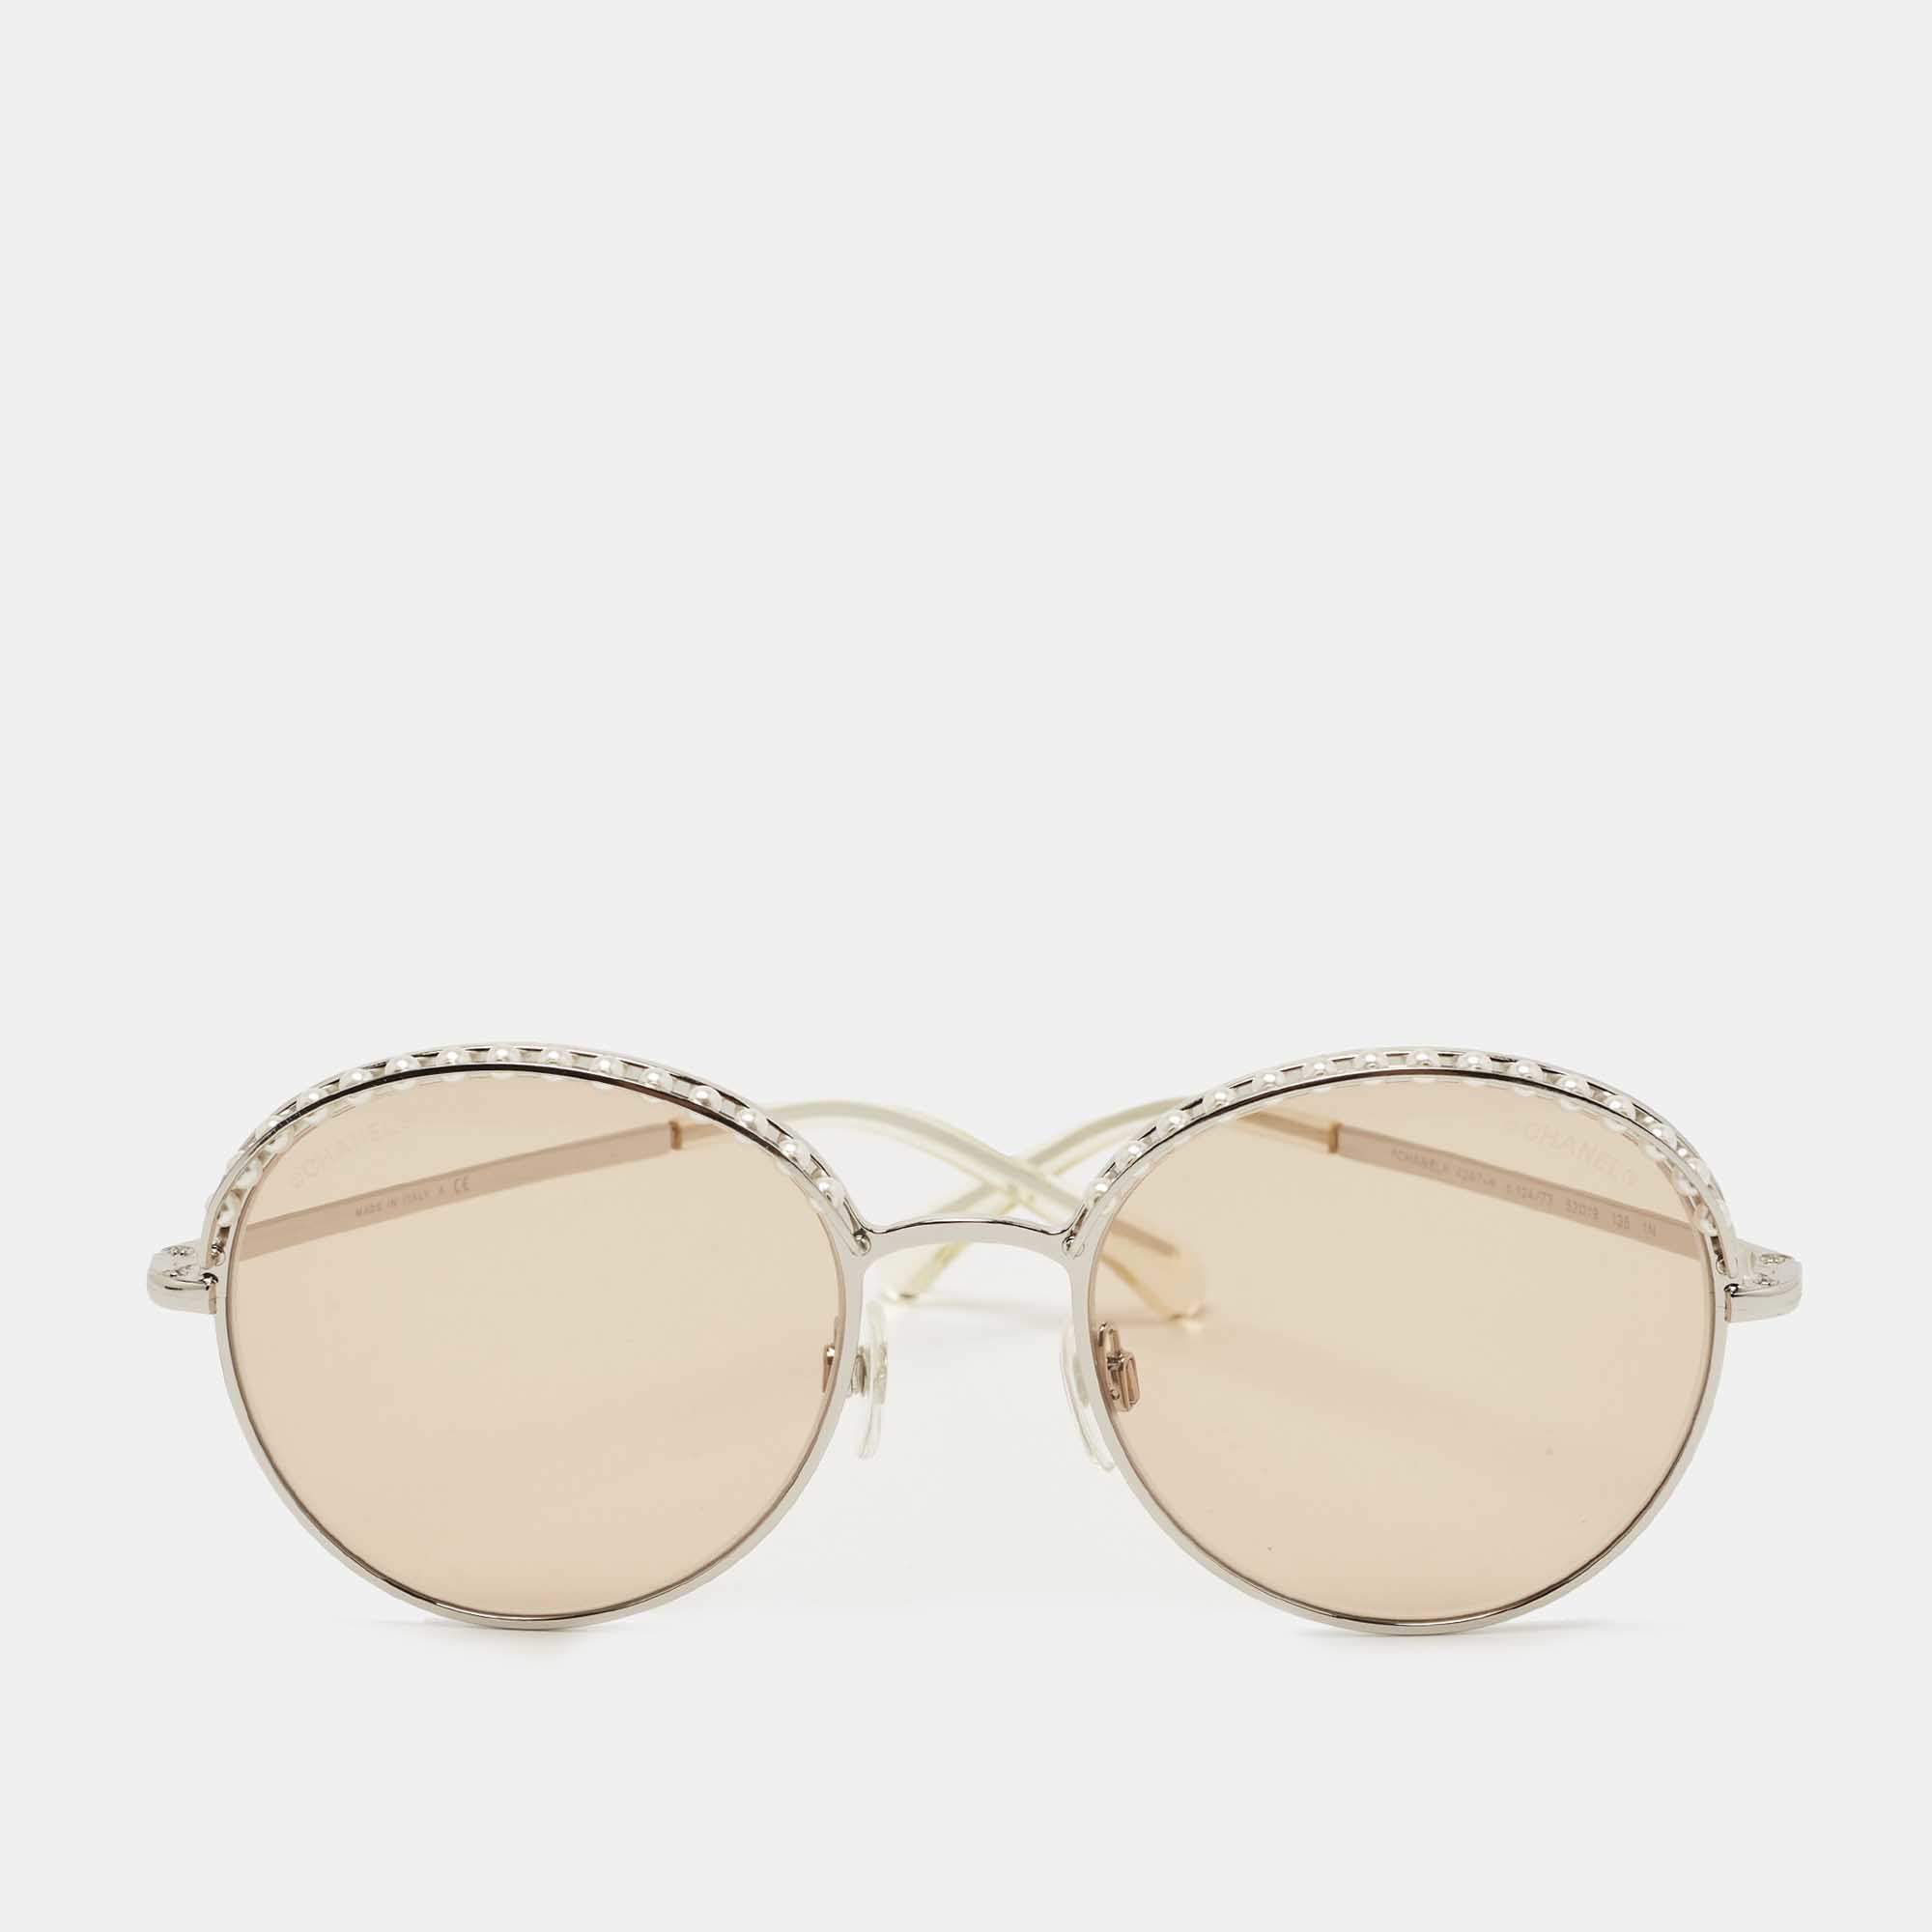 Chanel Silver Tone/Beige 4247-H Faux Pearl Round Sunglasses